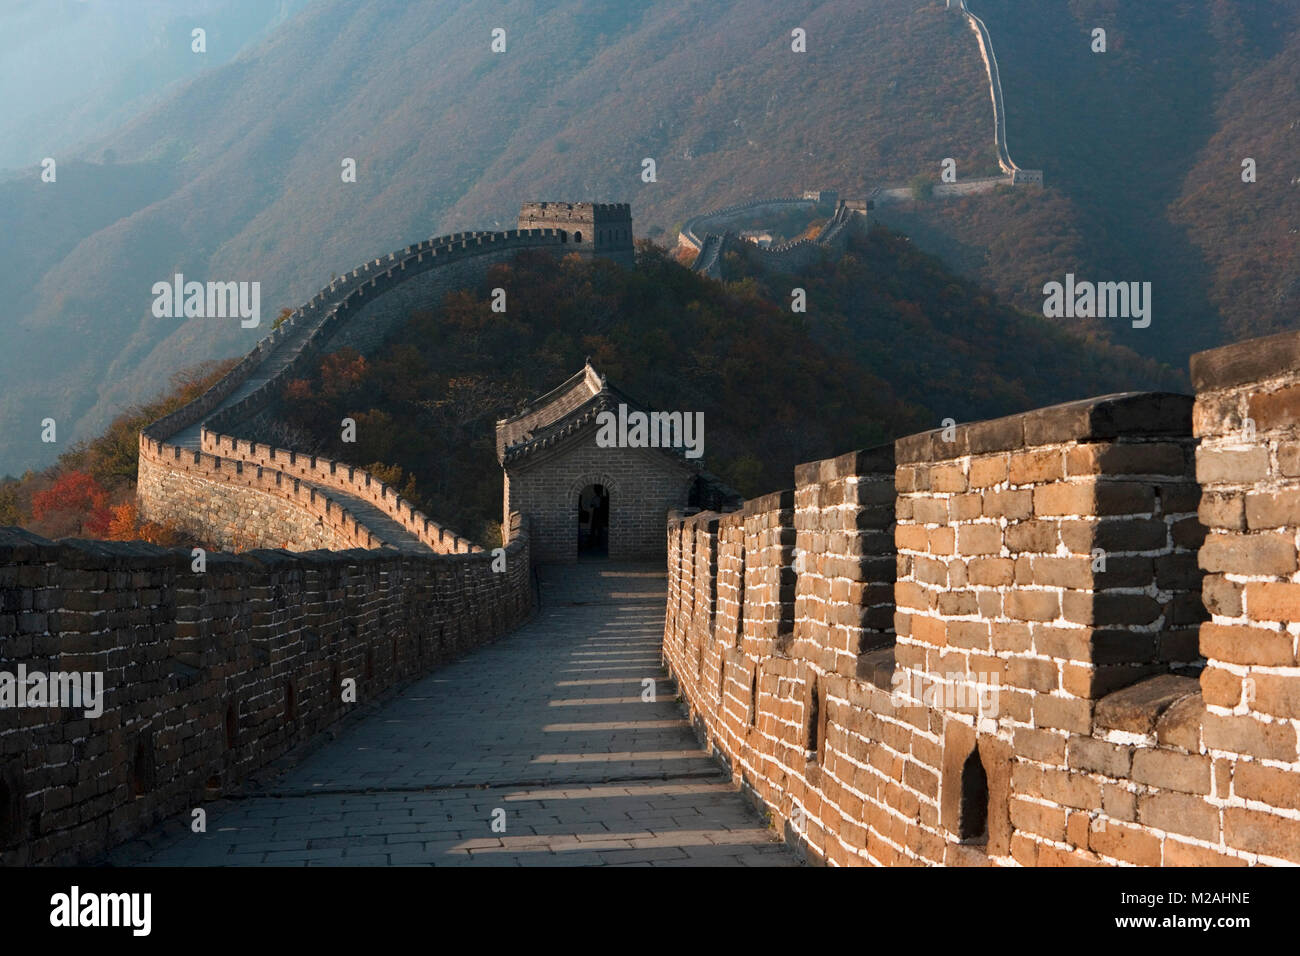 China. Mutianyu, near Beijing. The Great Wall. UNESCO World Heritage site. Stock Photo